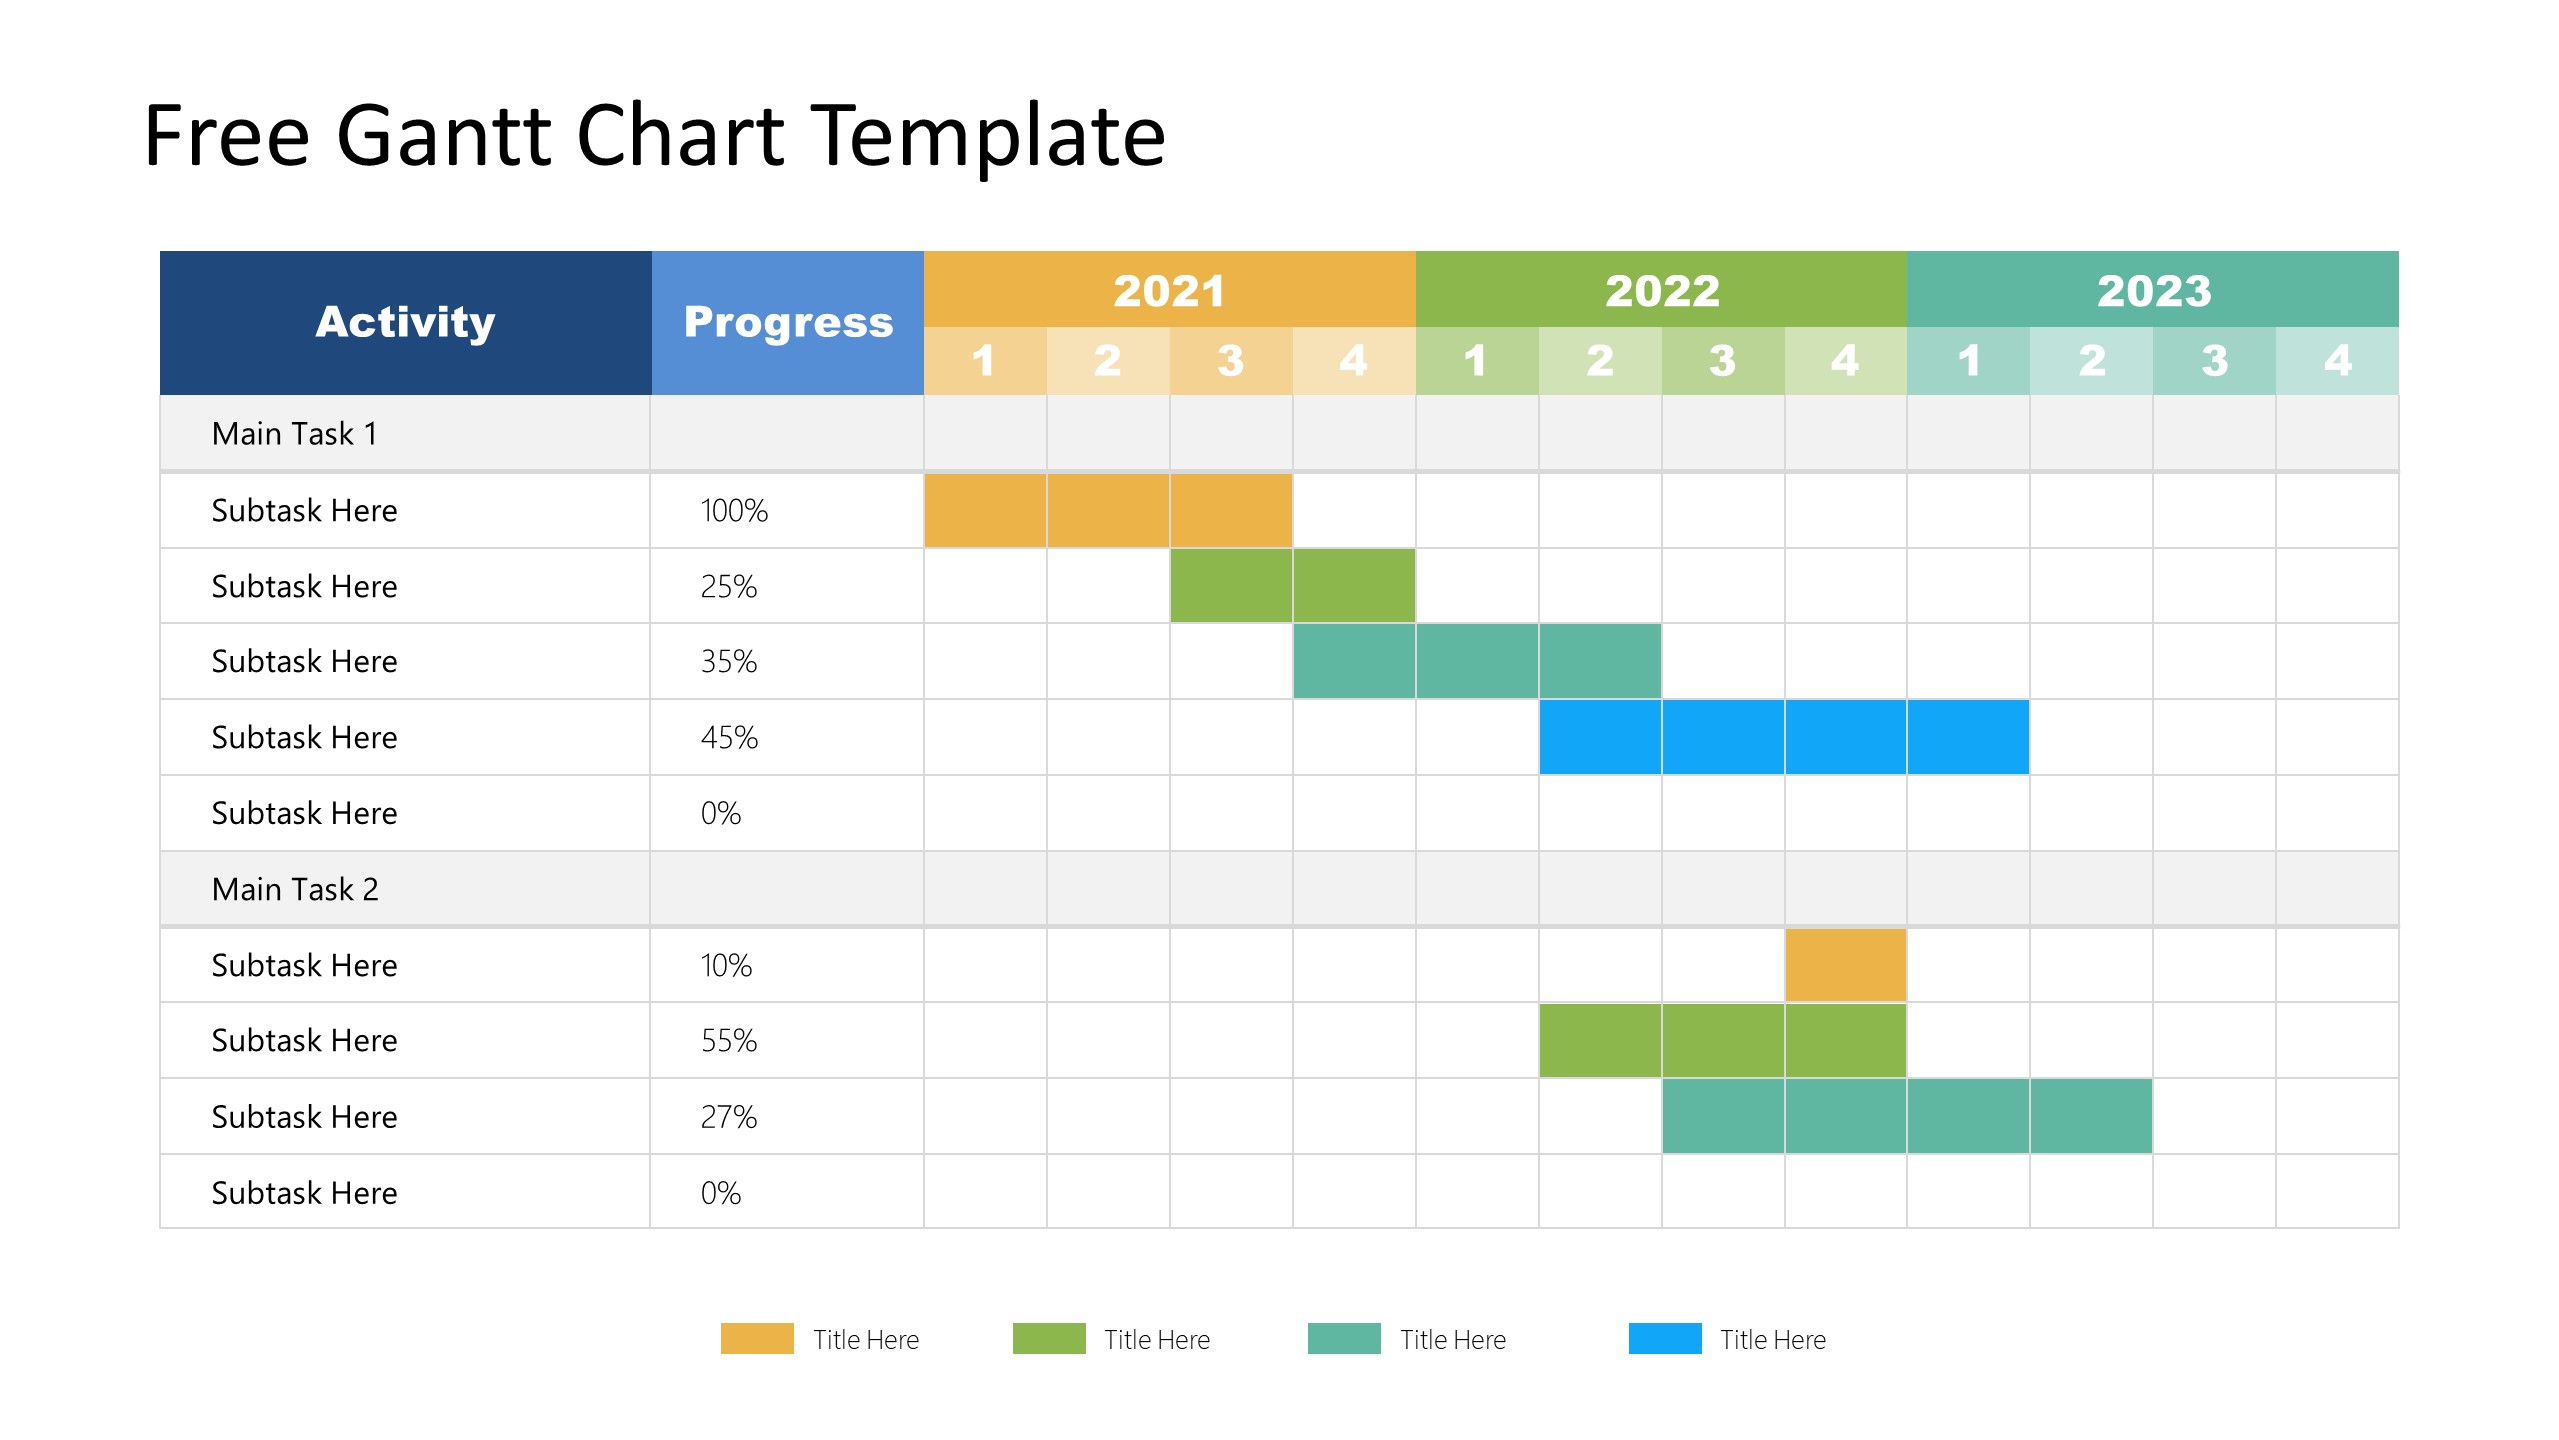 project timeline gantt chart template